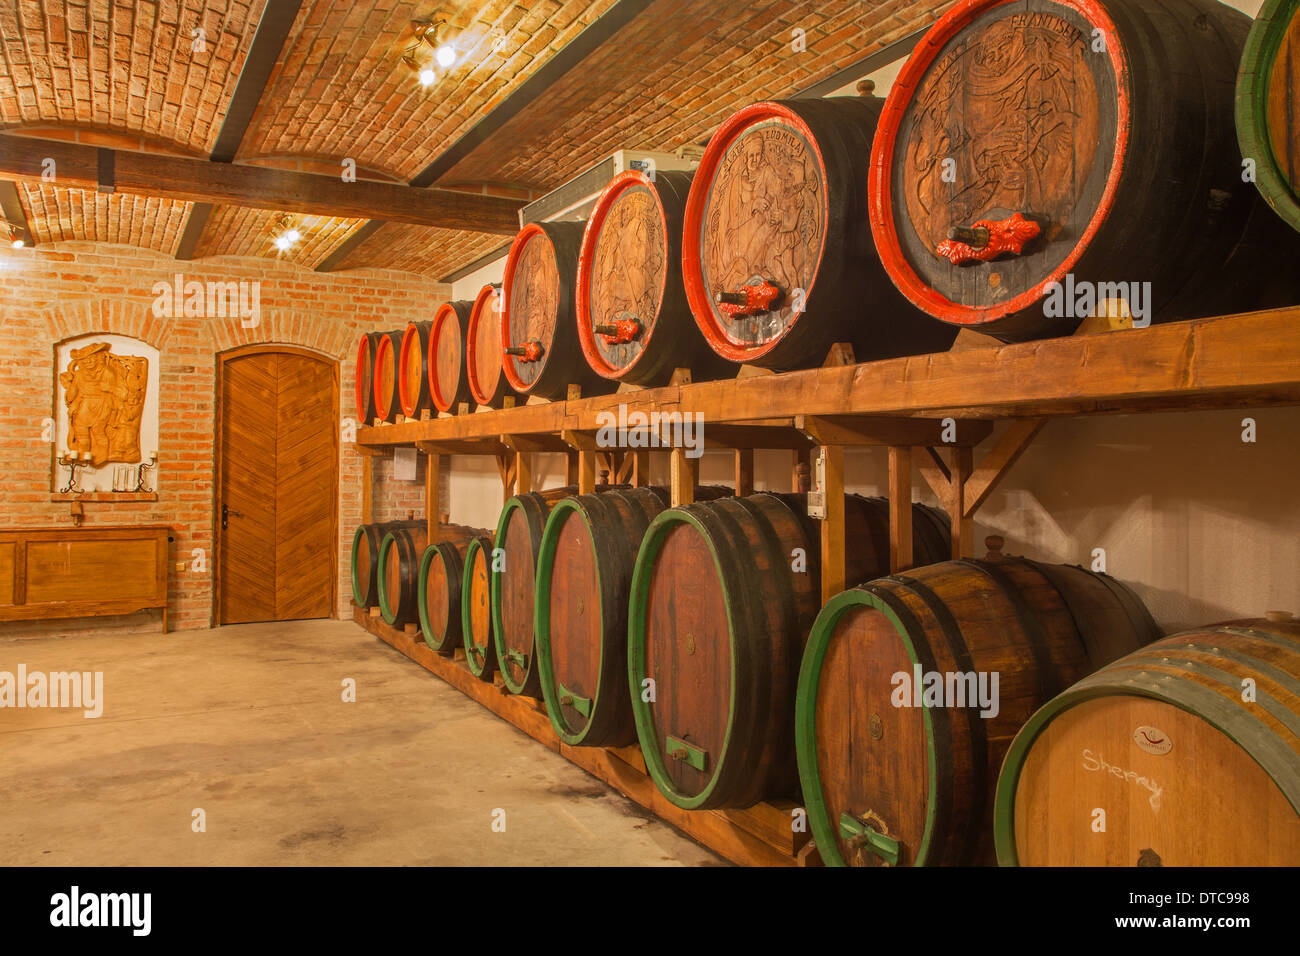 BRATISLAVA, SLOVAKIA - JANUARY 30, 2014: Interior of wine cellar of great Slovak producer. Stock Photo